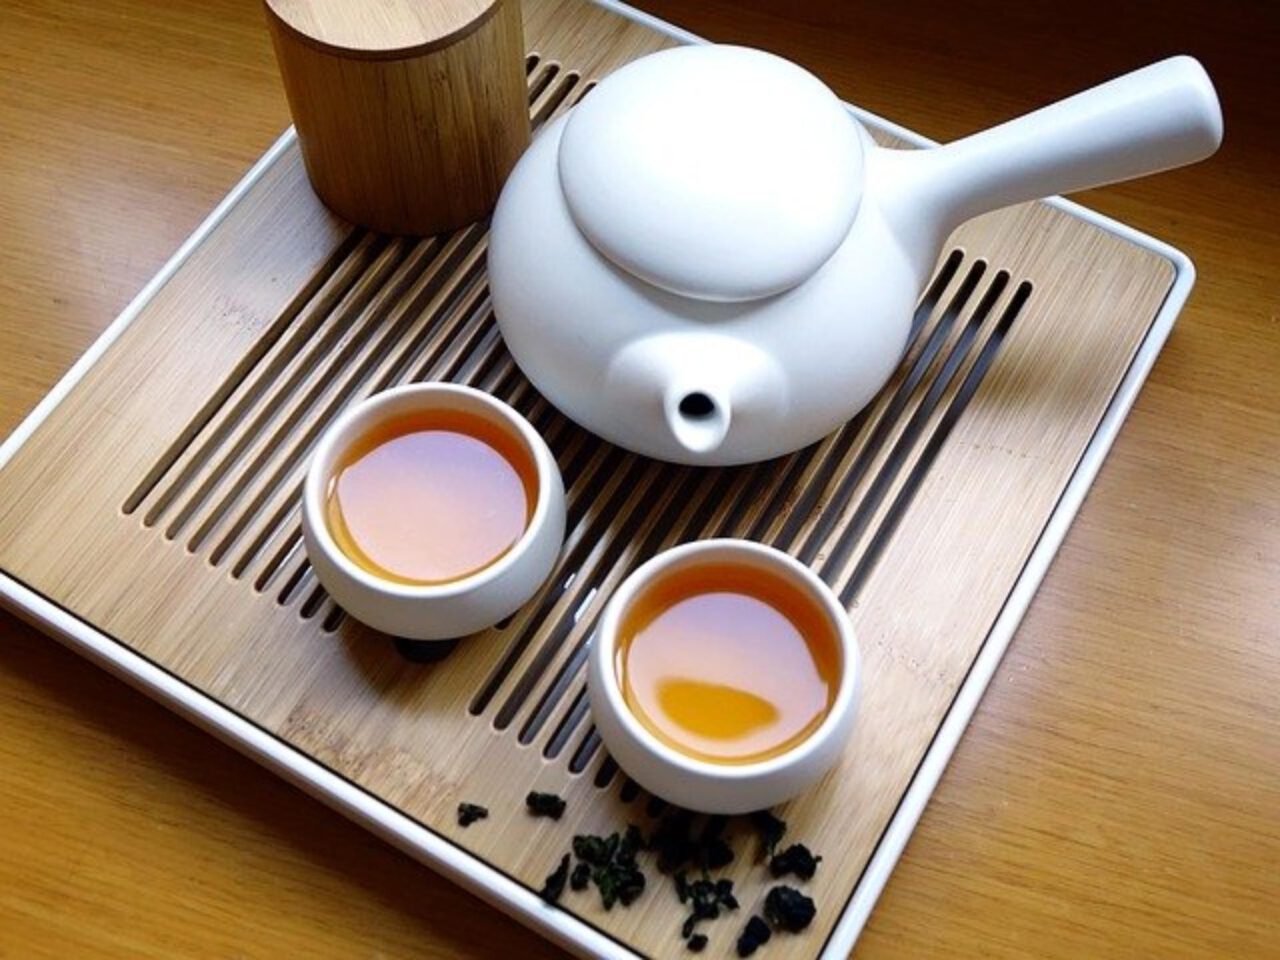 Picie herbaty na azjatycką modłę